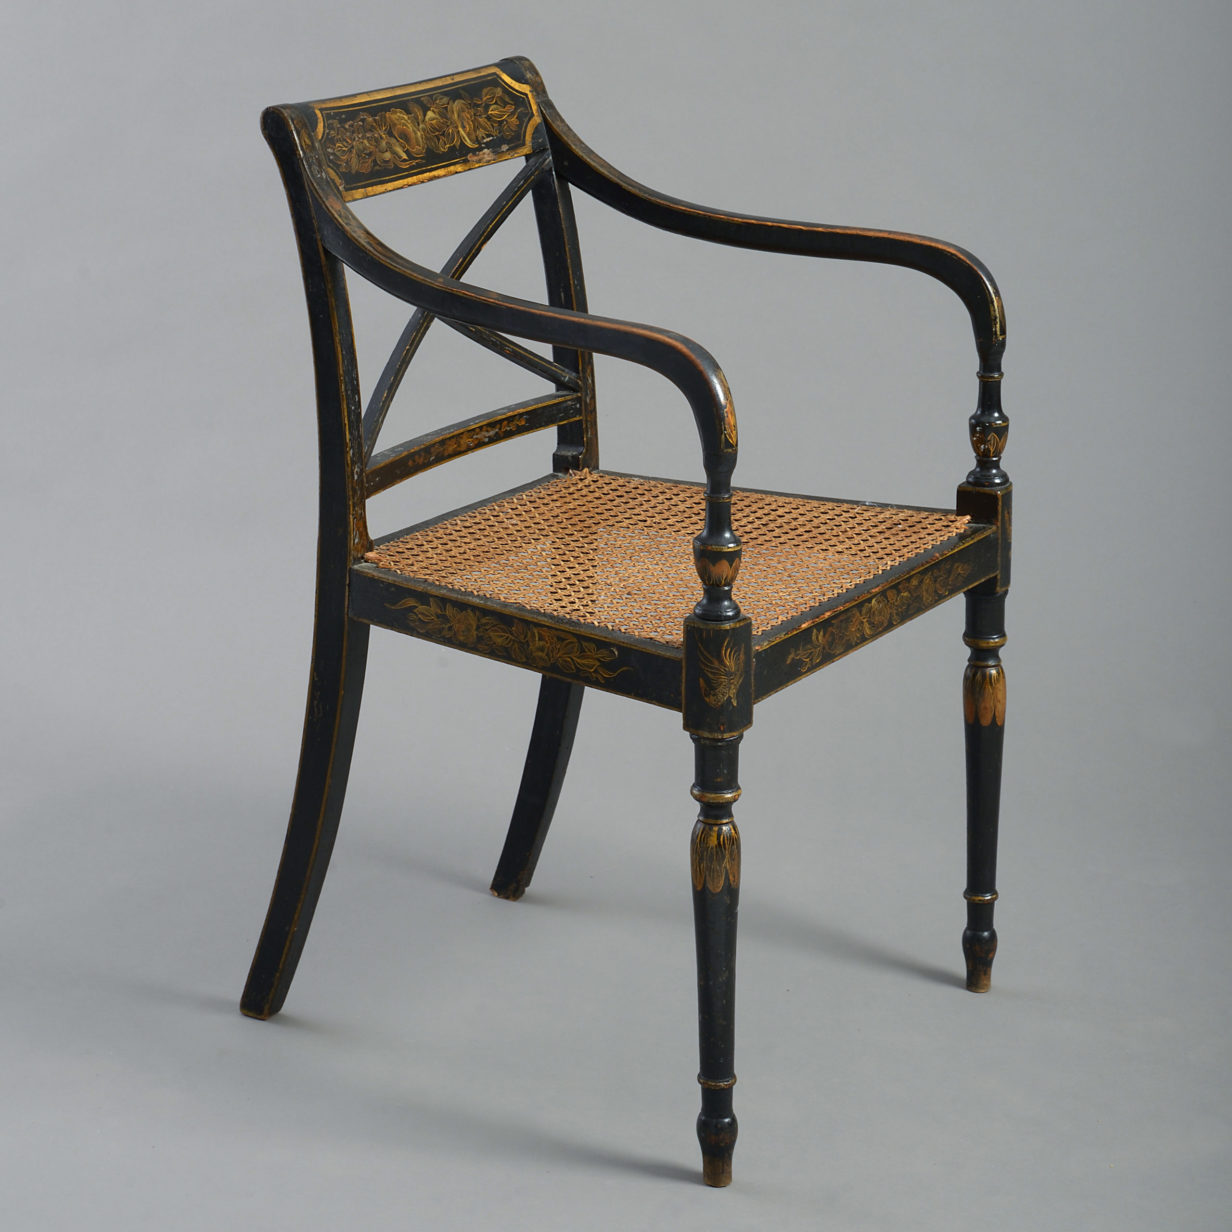 An early 19th century regency period ebonised open armchair